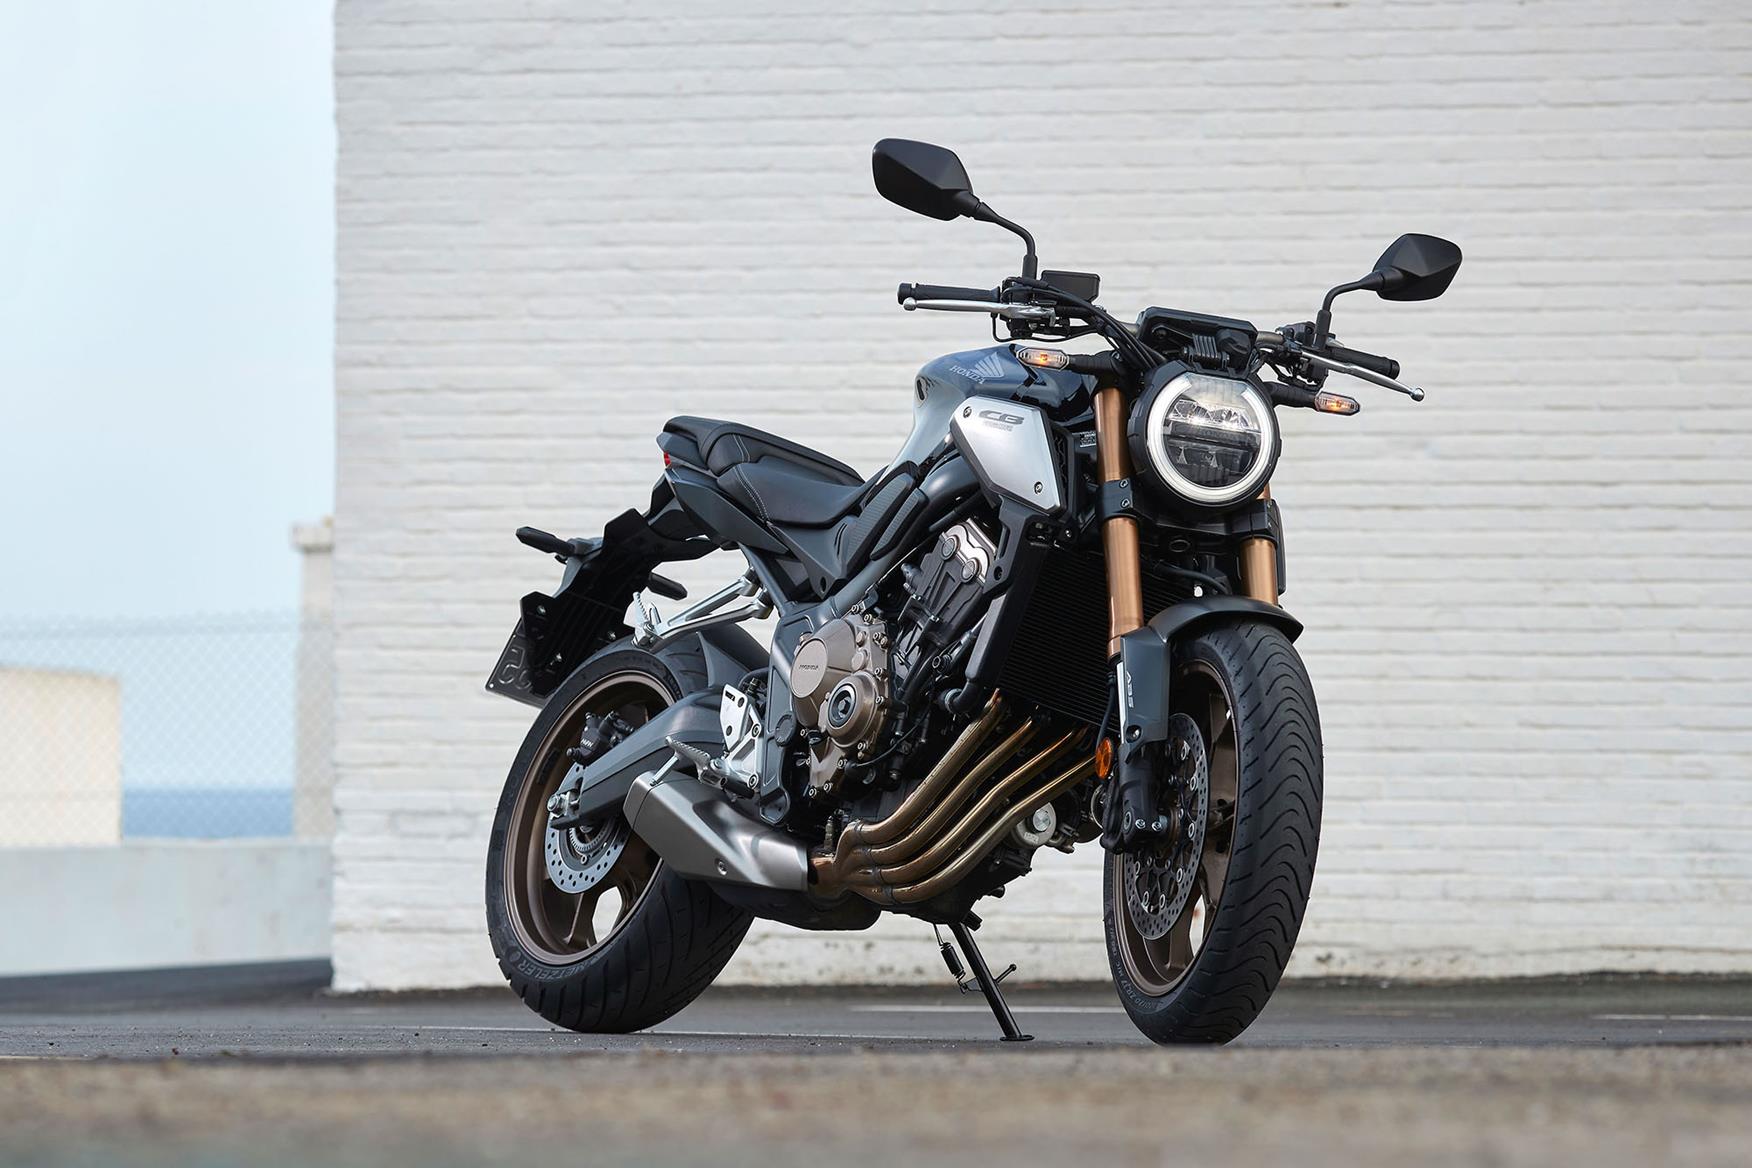 2019 Honda CB650R Technical Specifications